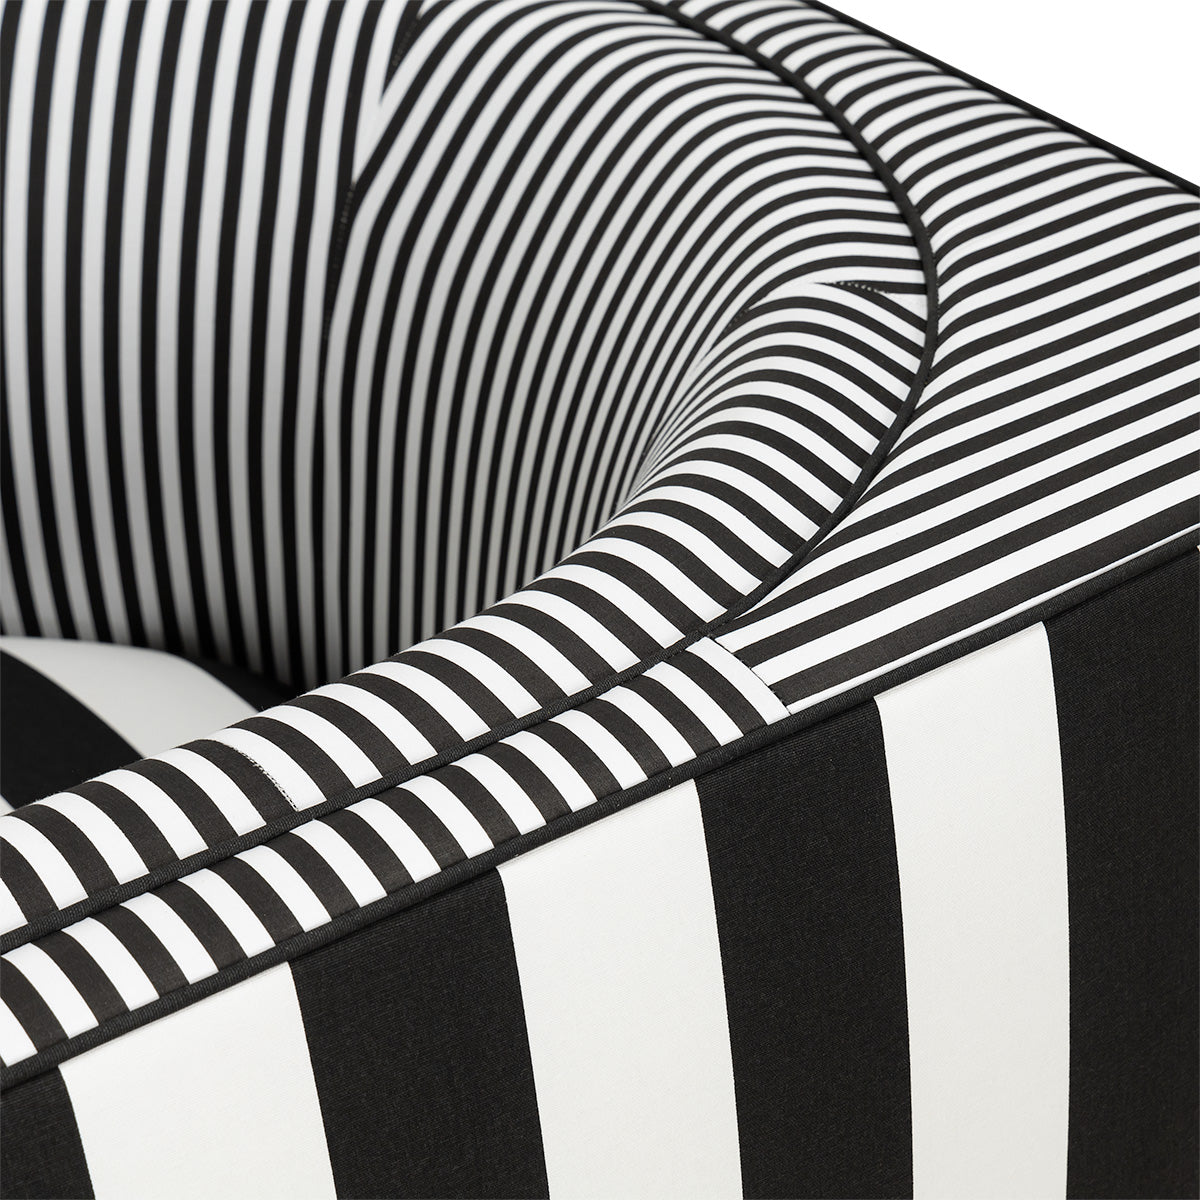 Goldfinger Sofa in Black and White Stripes